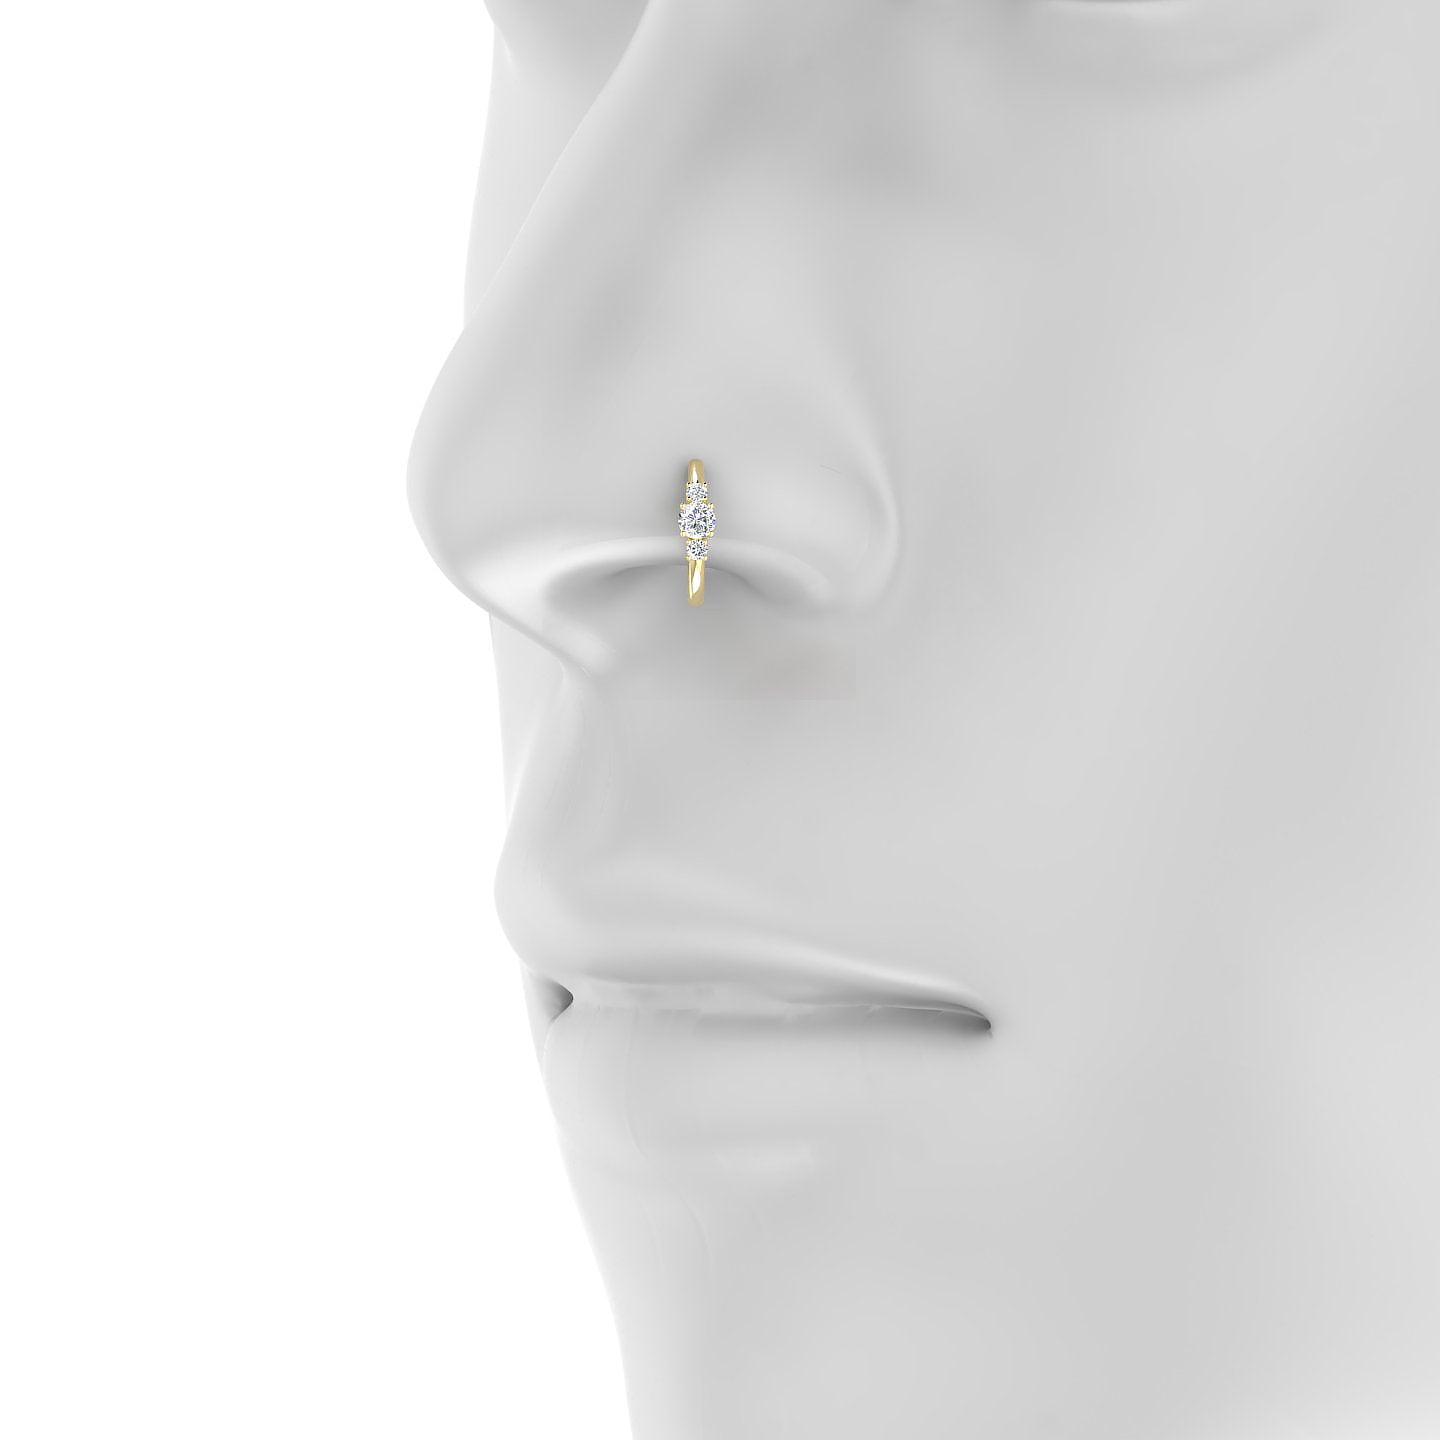 Grace | 18k Yellow Gold 9.5 mm Trilogy Round Diamond Nose Ring Piercing